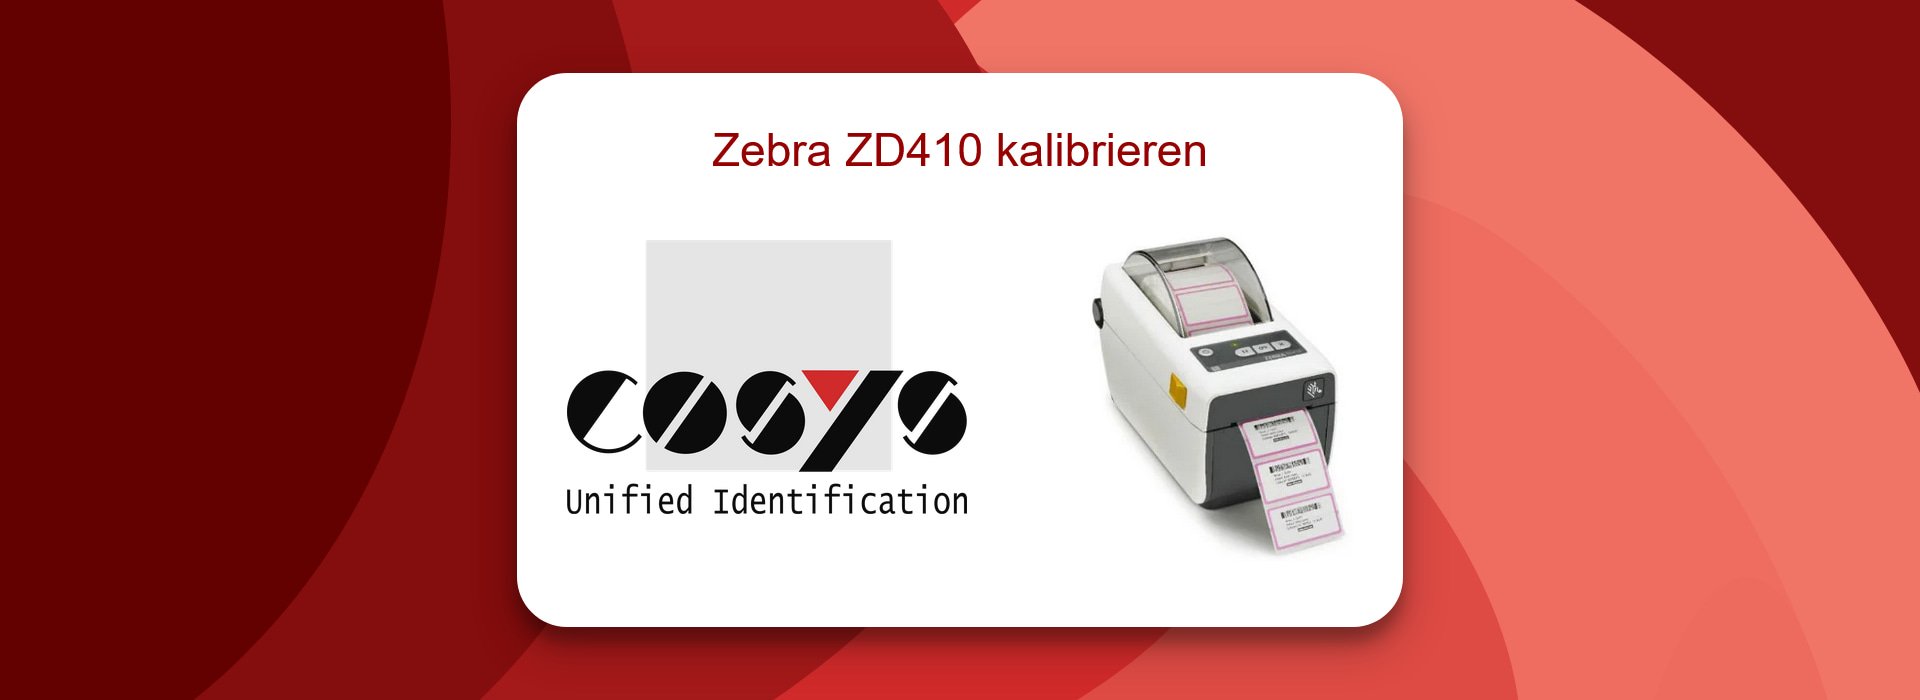 Fehlerbehebung: Zebra ZD410 kalibrieren